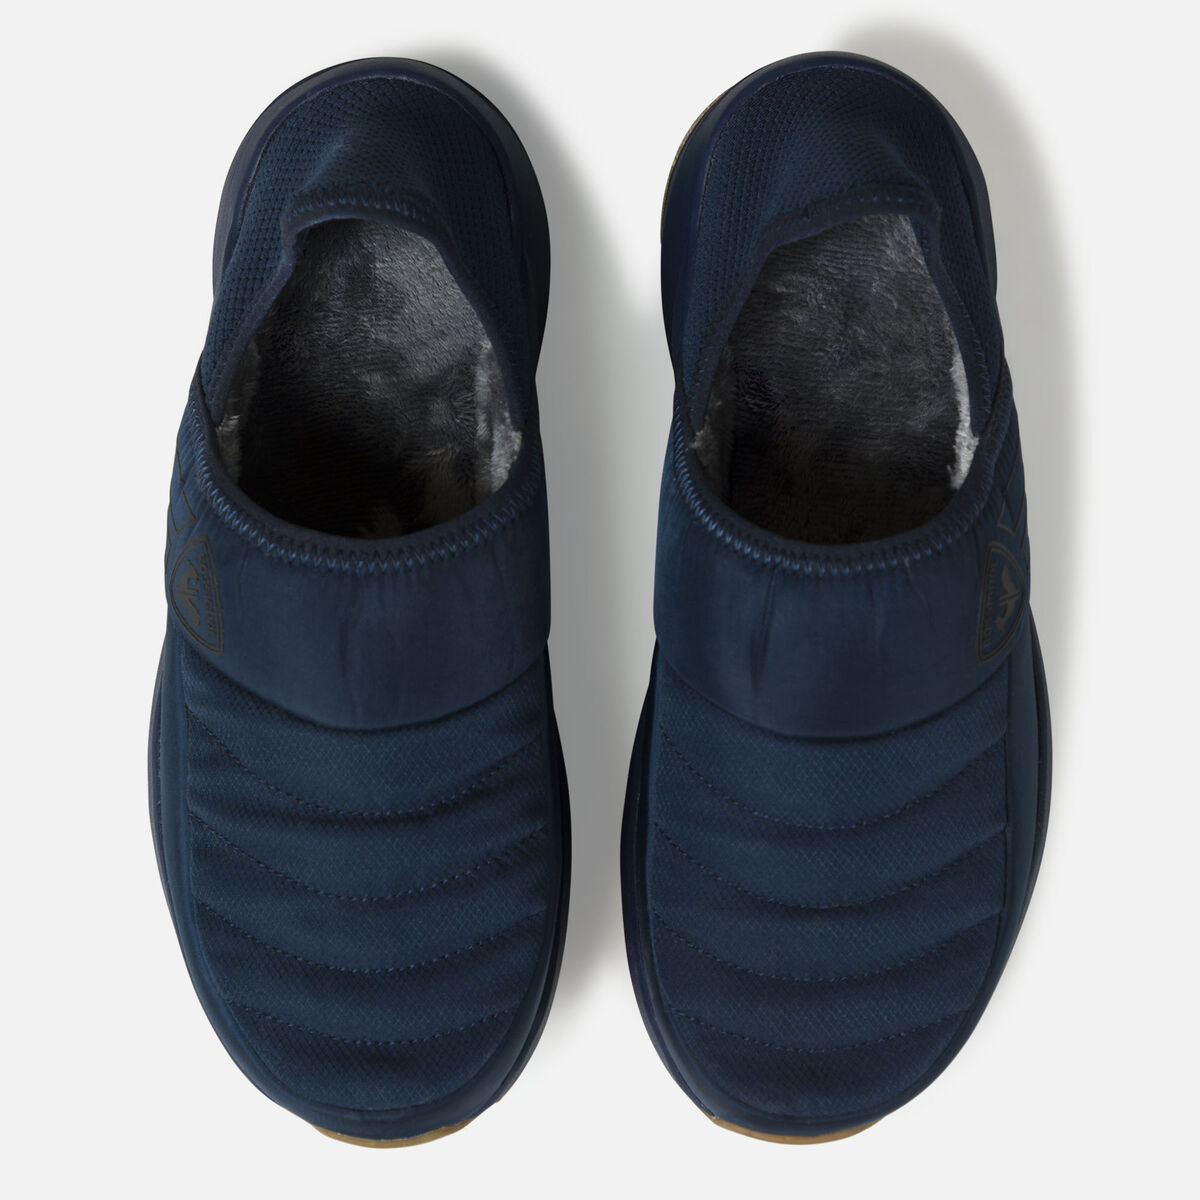 Pantofole invernali uomo Chalet 2.0 blu